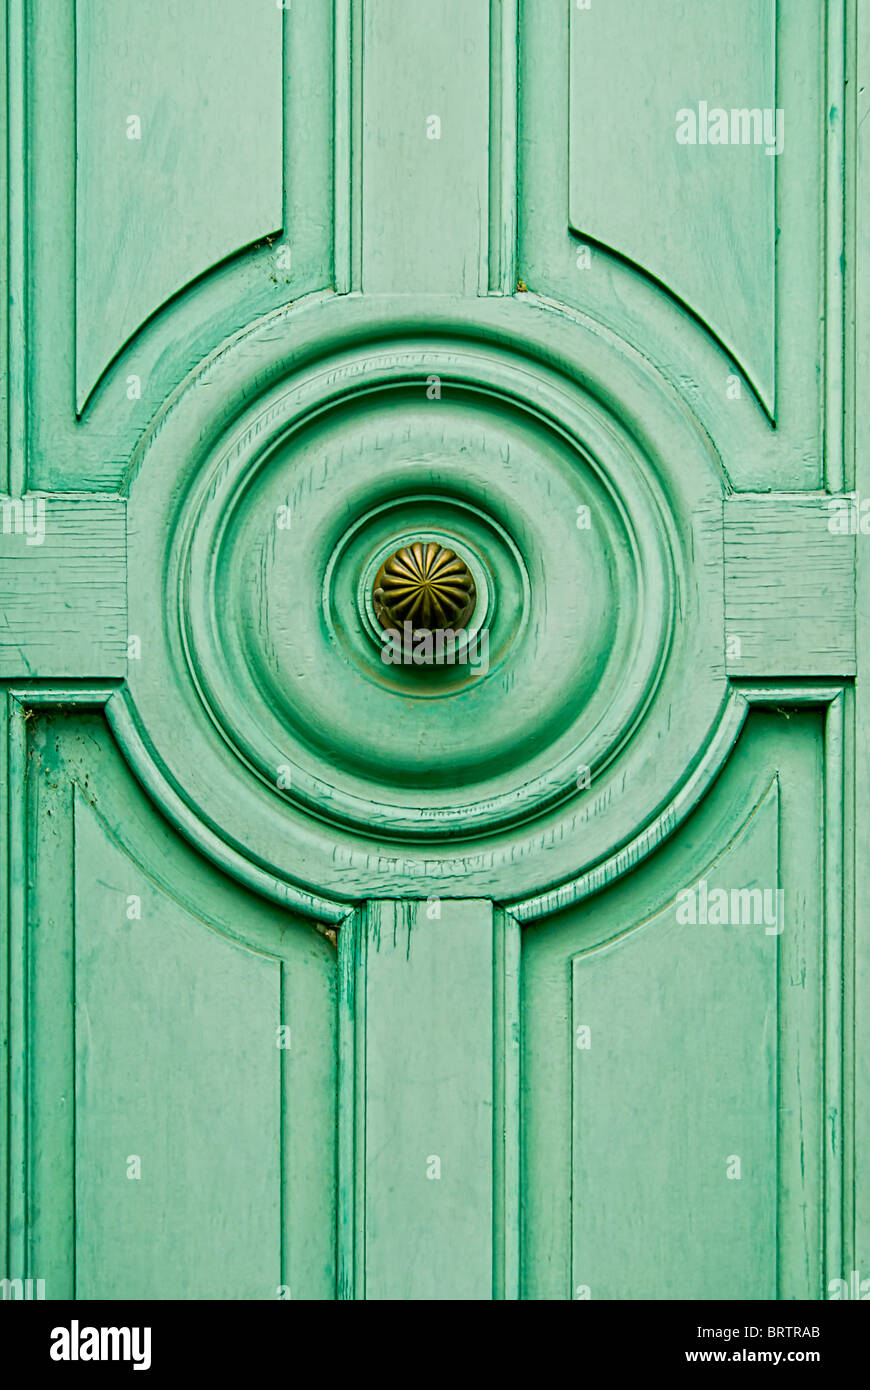 A wooden door, painted in green, with a brass door knob. Stock Photo